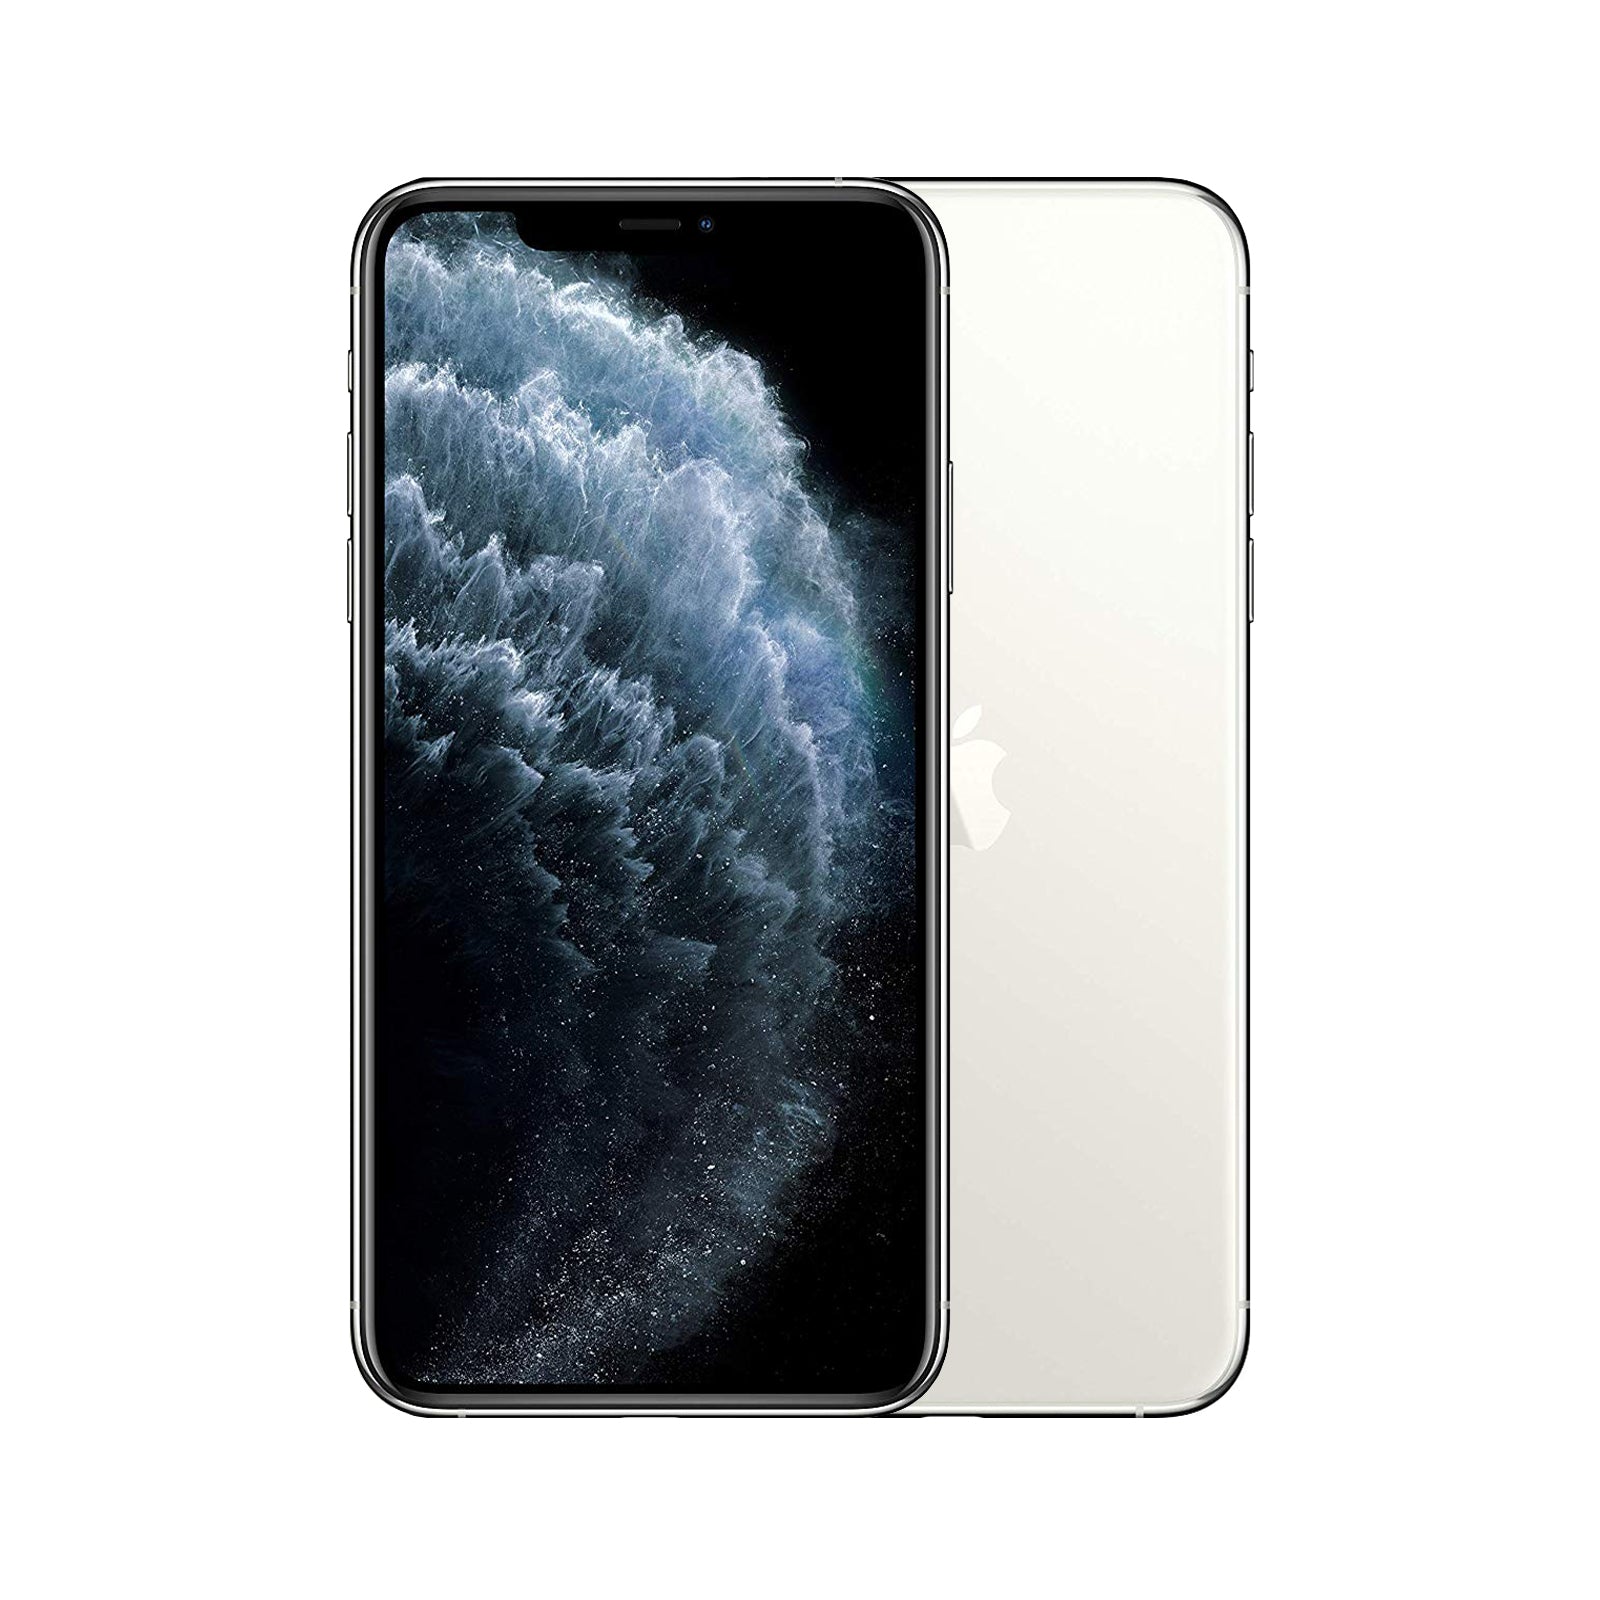 Apple iPhone 11 Pro 256GB Silver - Very Good - Refurbished